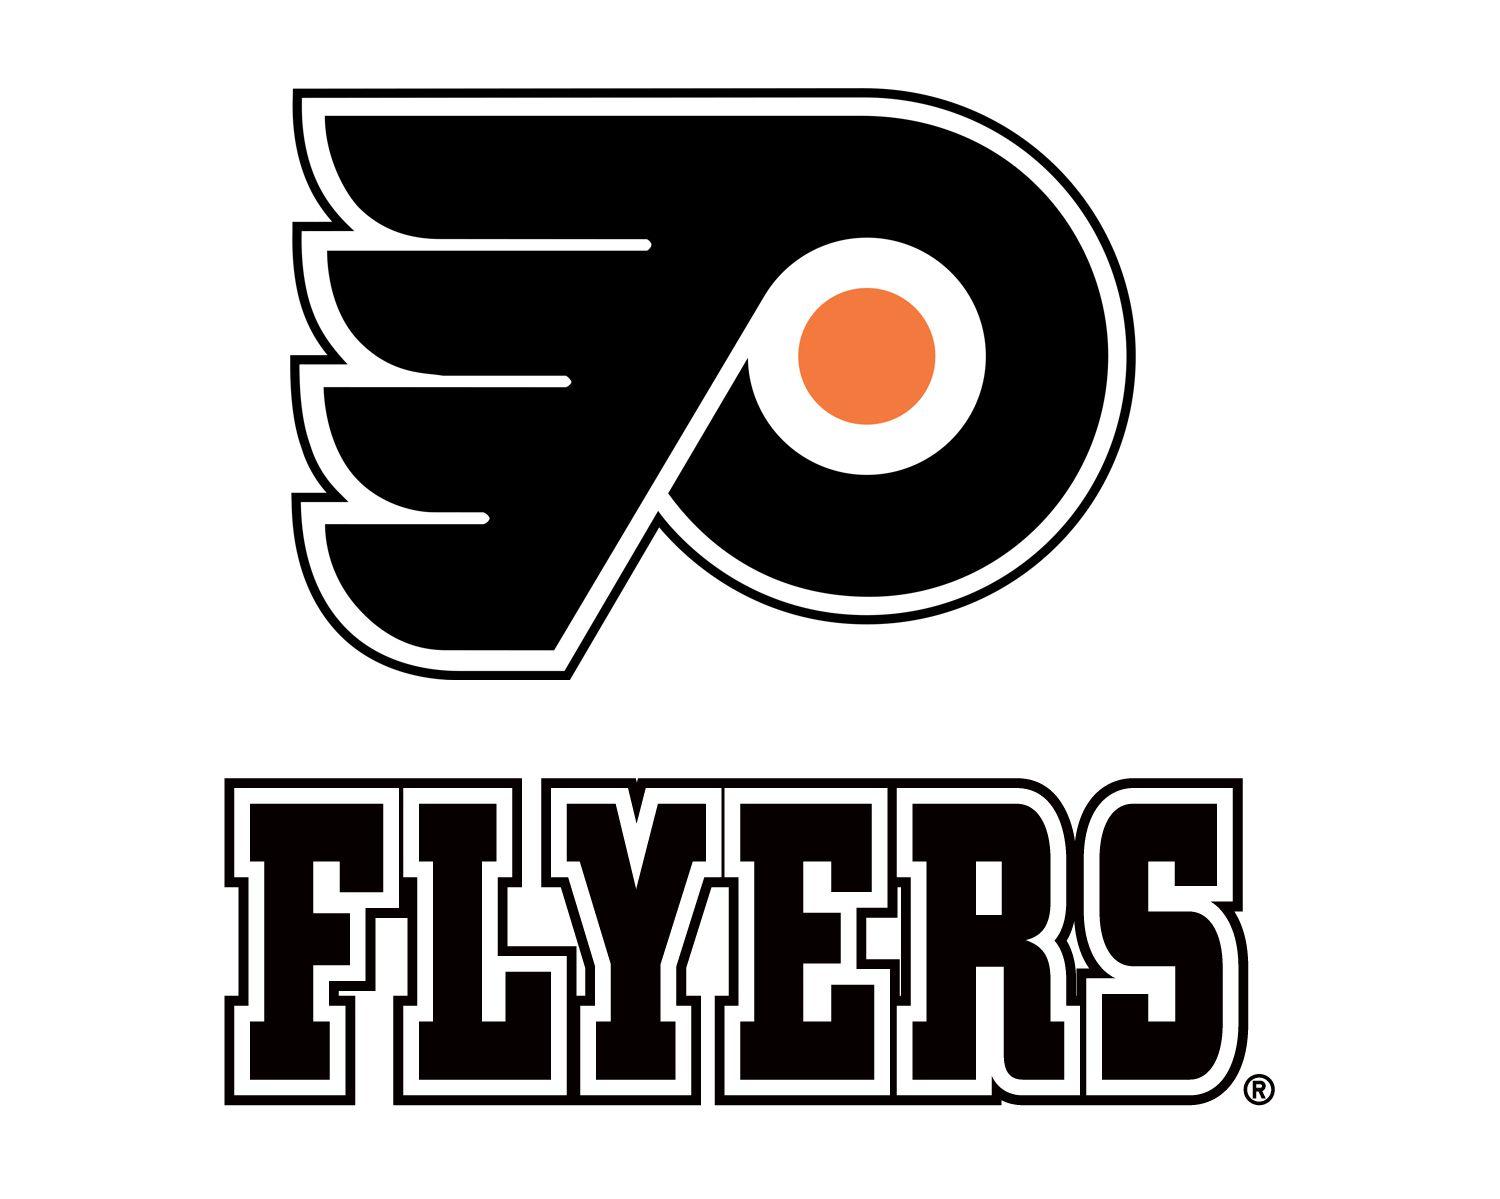 Philadelphia Flyers Logo - Philadelphia Flyers Logo, Flyers Symbol, Meaning, History and Evolution